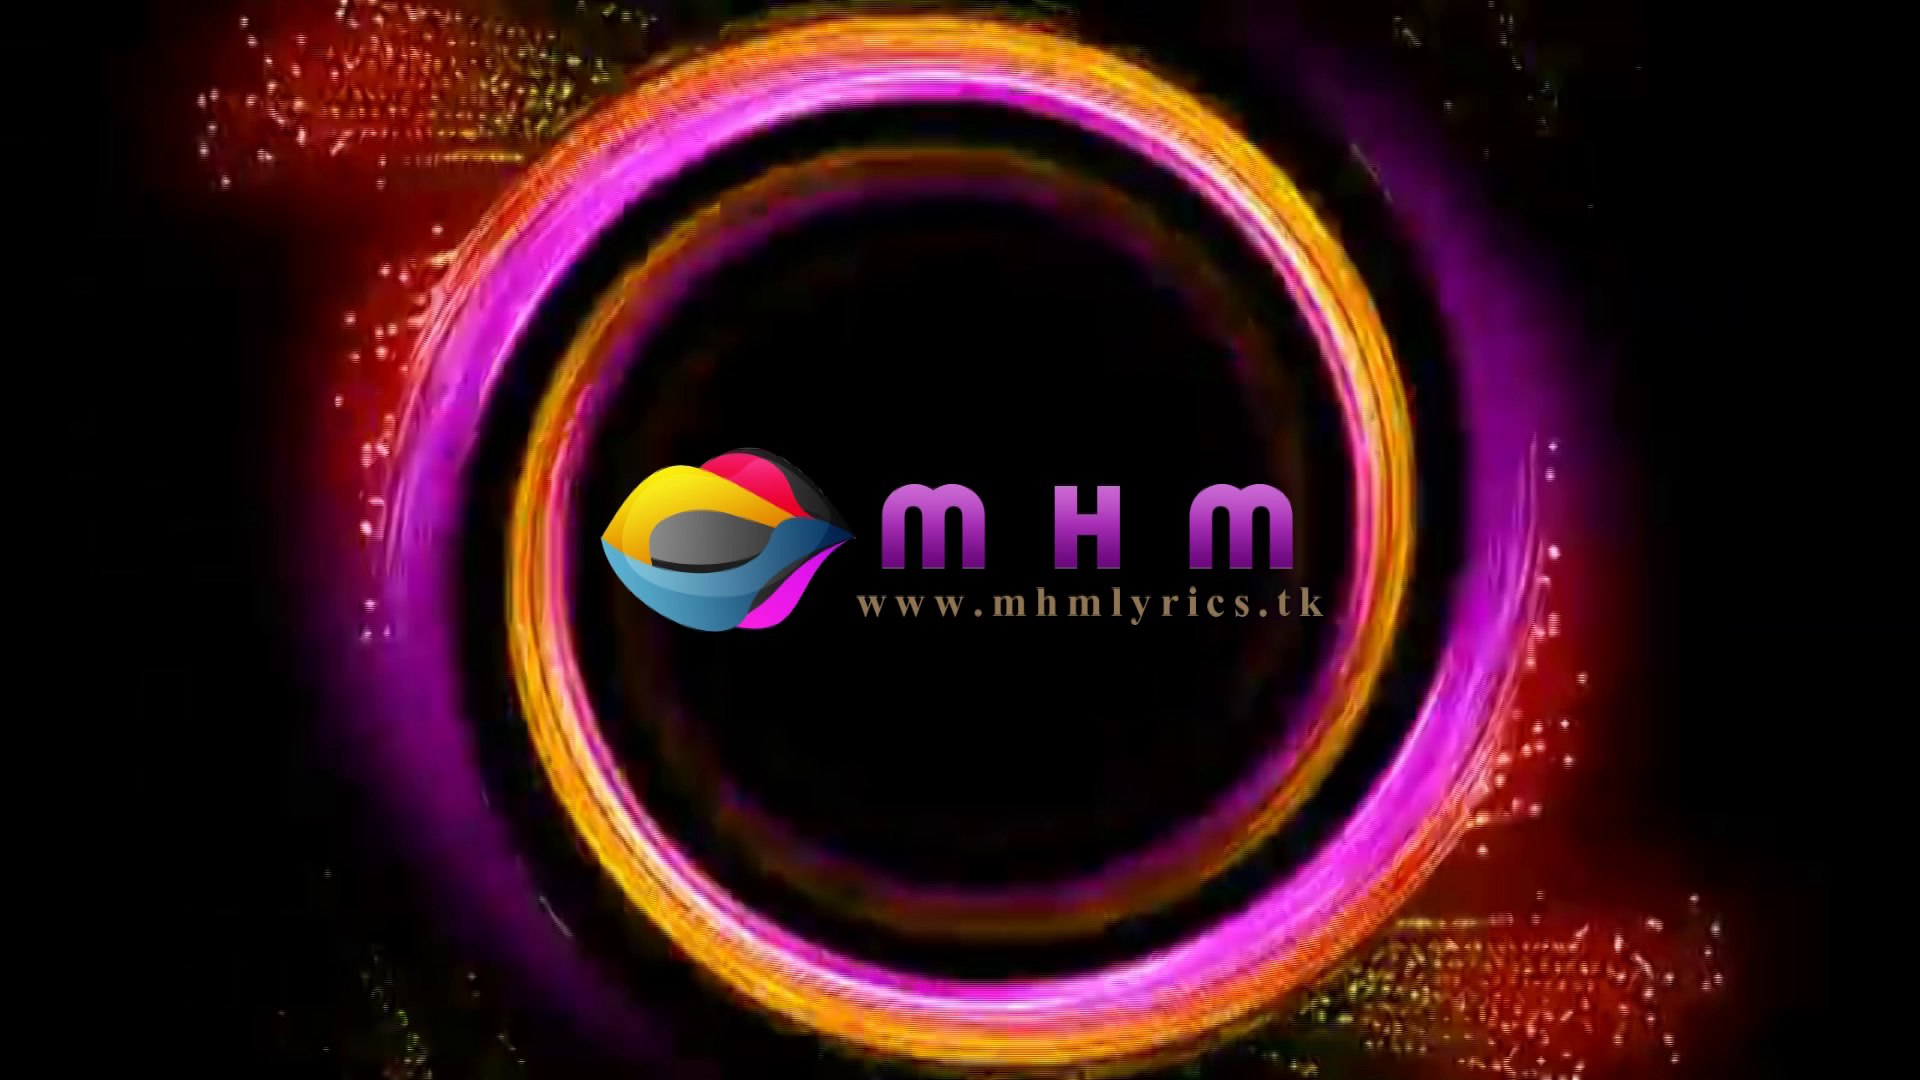 MHM Lyrics Logo Ultra HD 4K